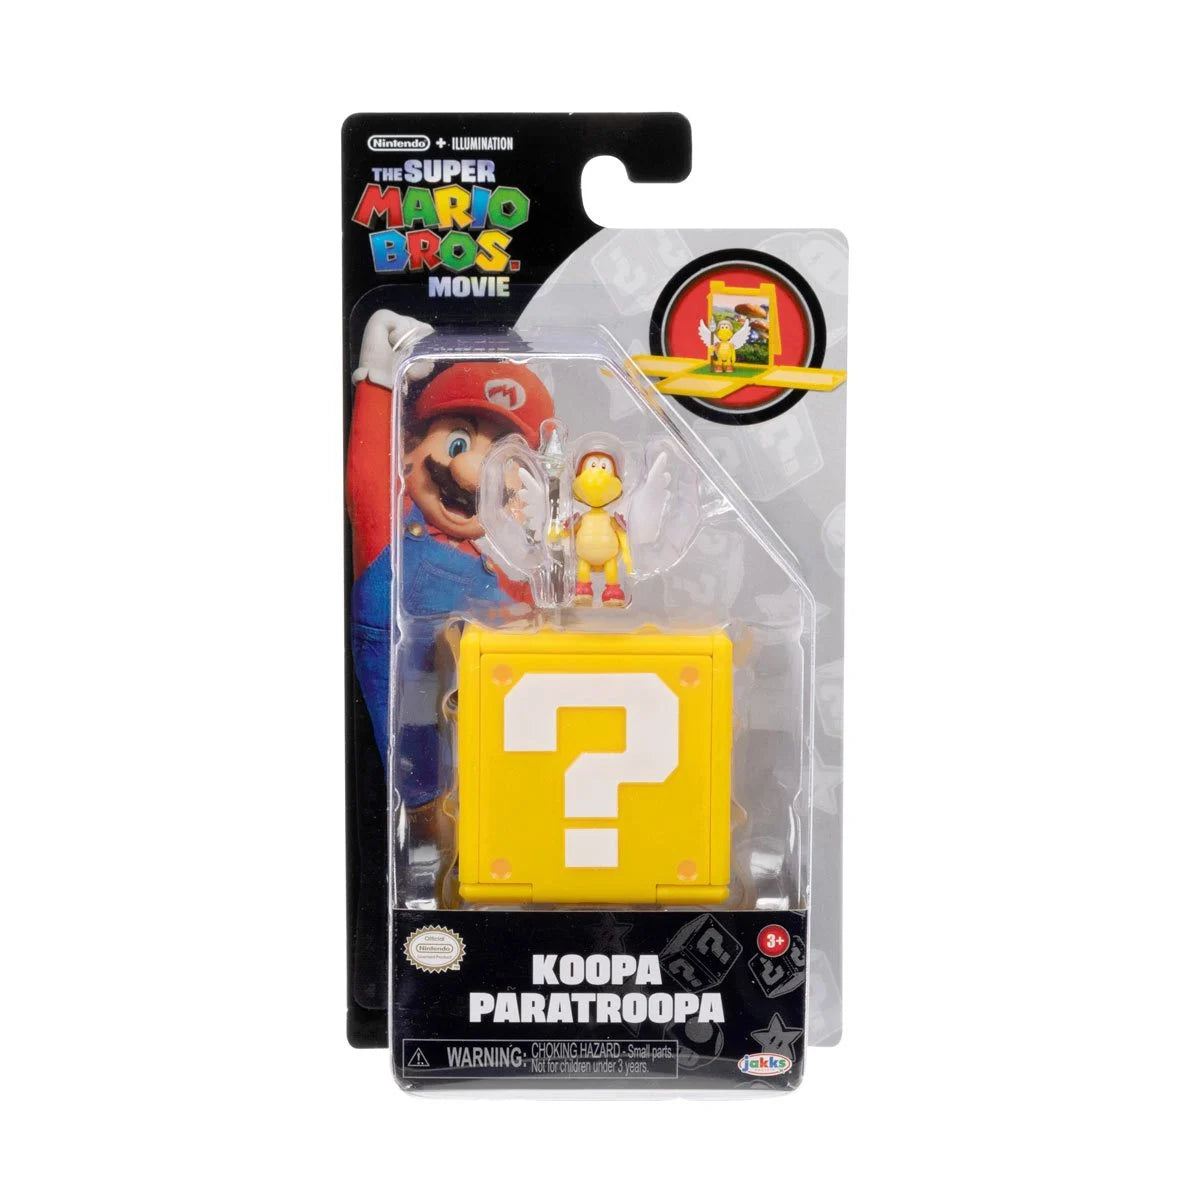 The Super Mario Bros. Movie Mini-Figures- KOOPA PARATROOPA